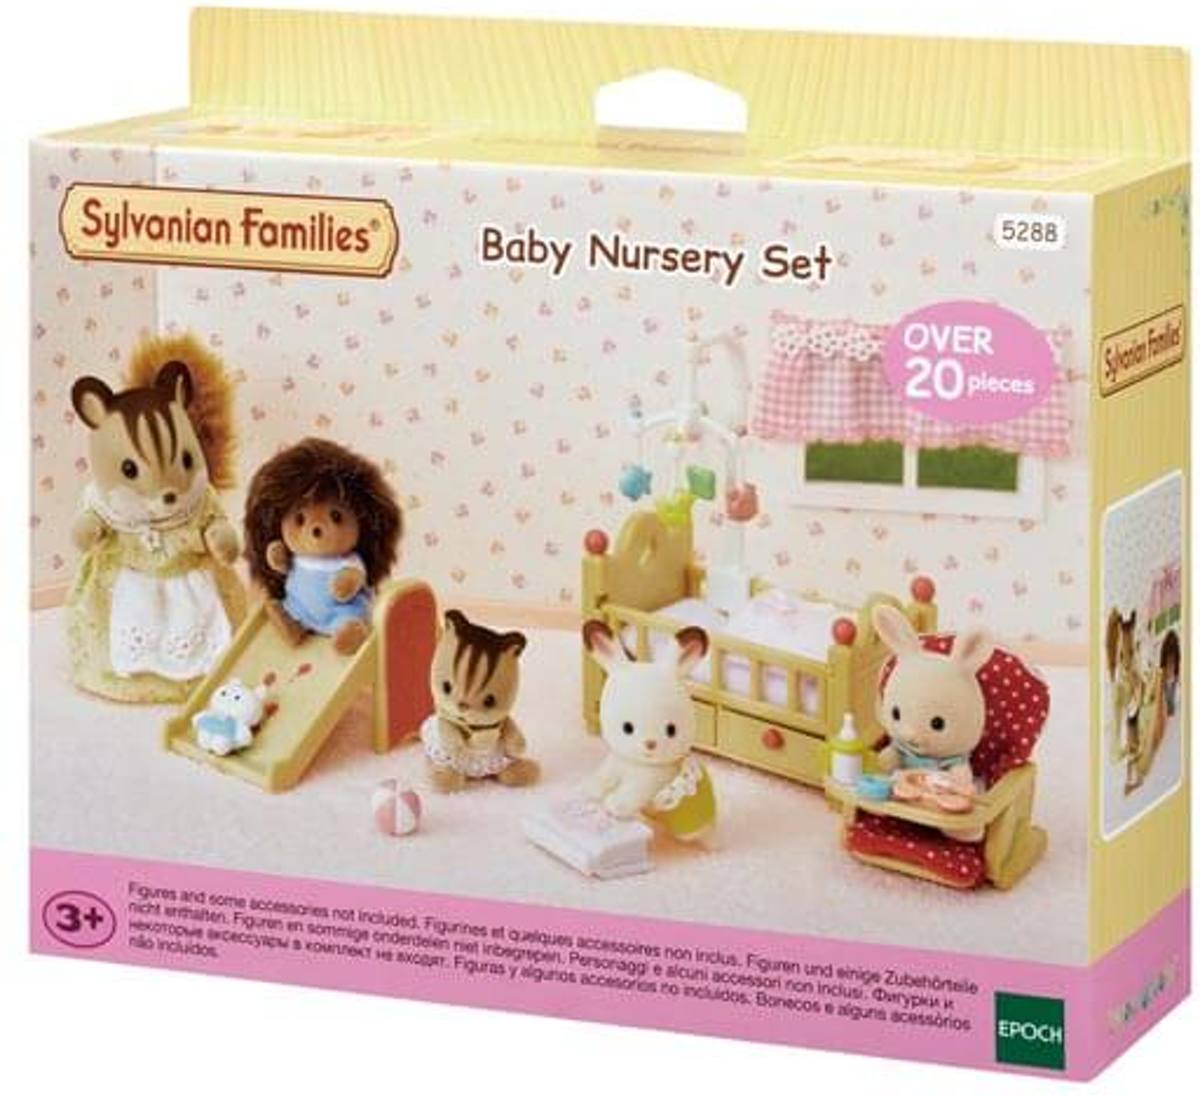 sylvanian families baby nursery set